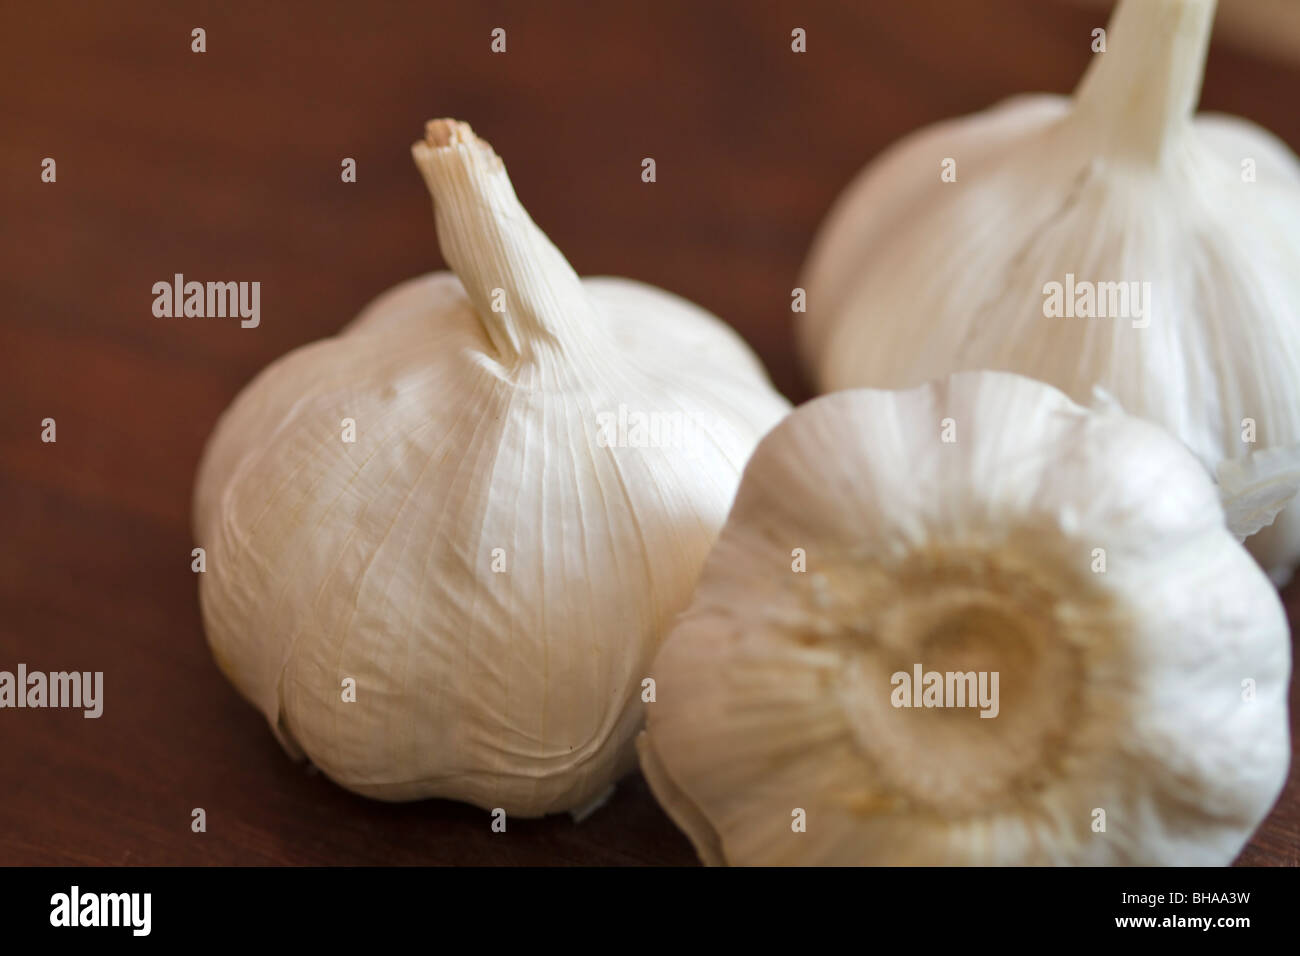 Whole garlic bulb Stock Photo